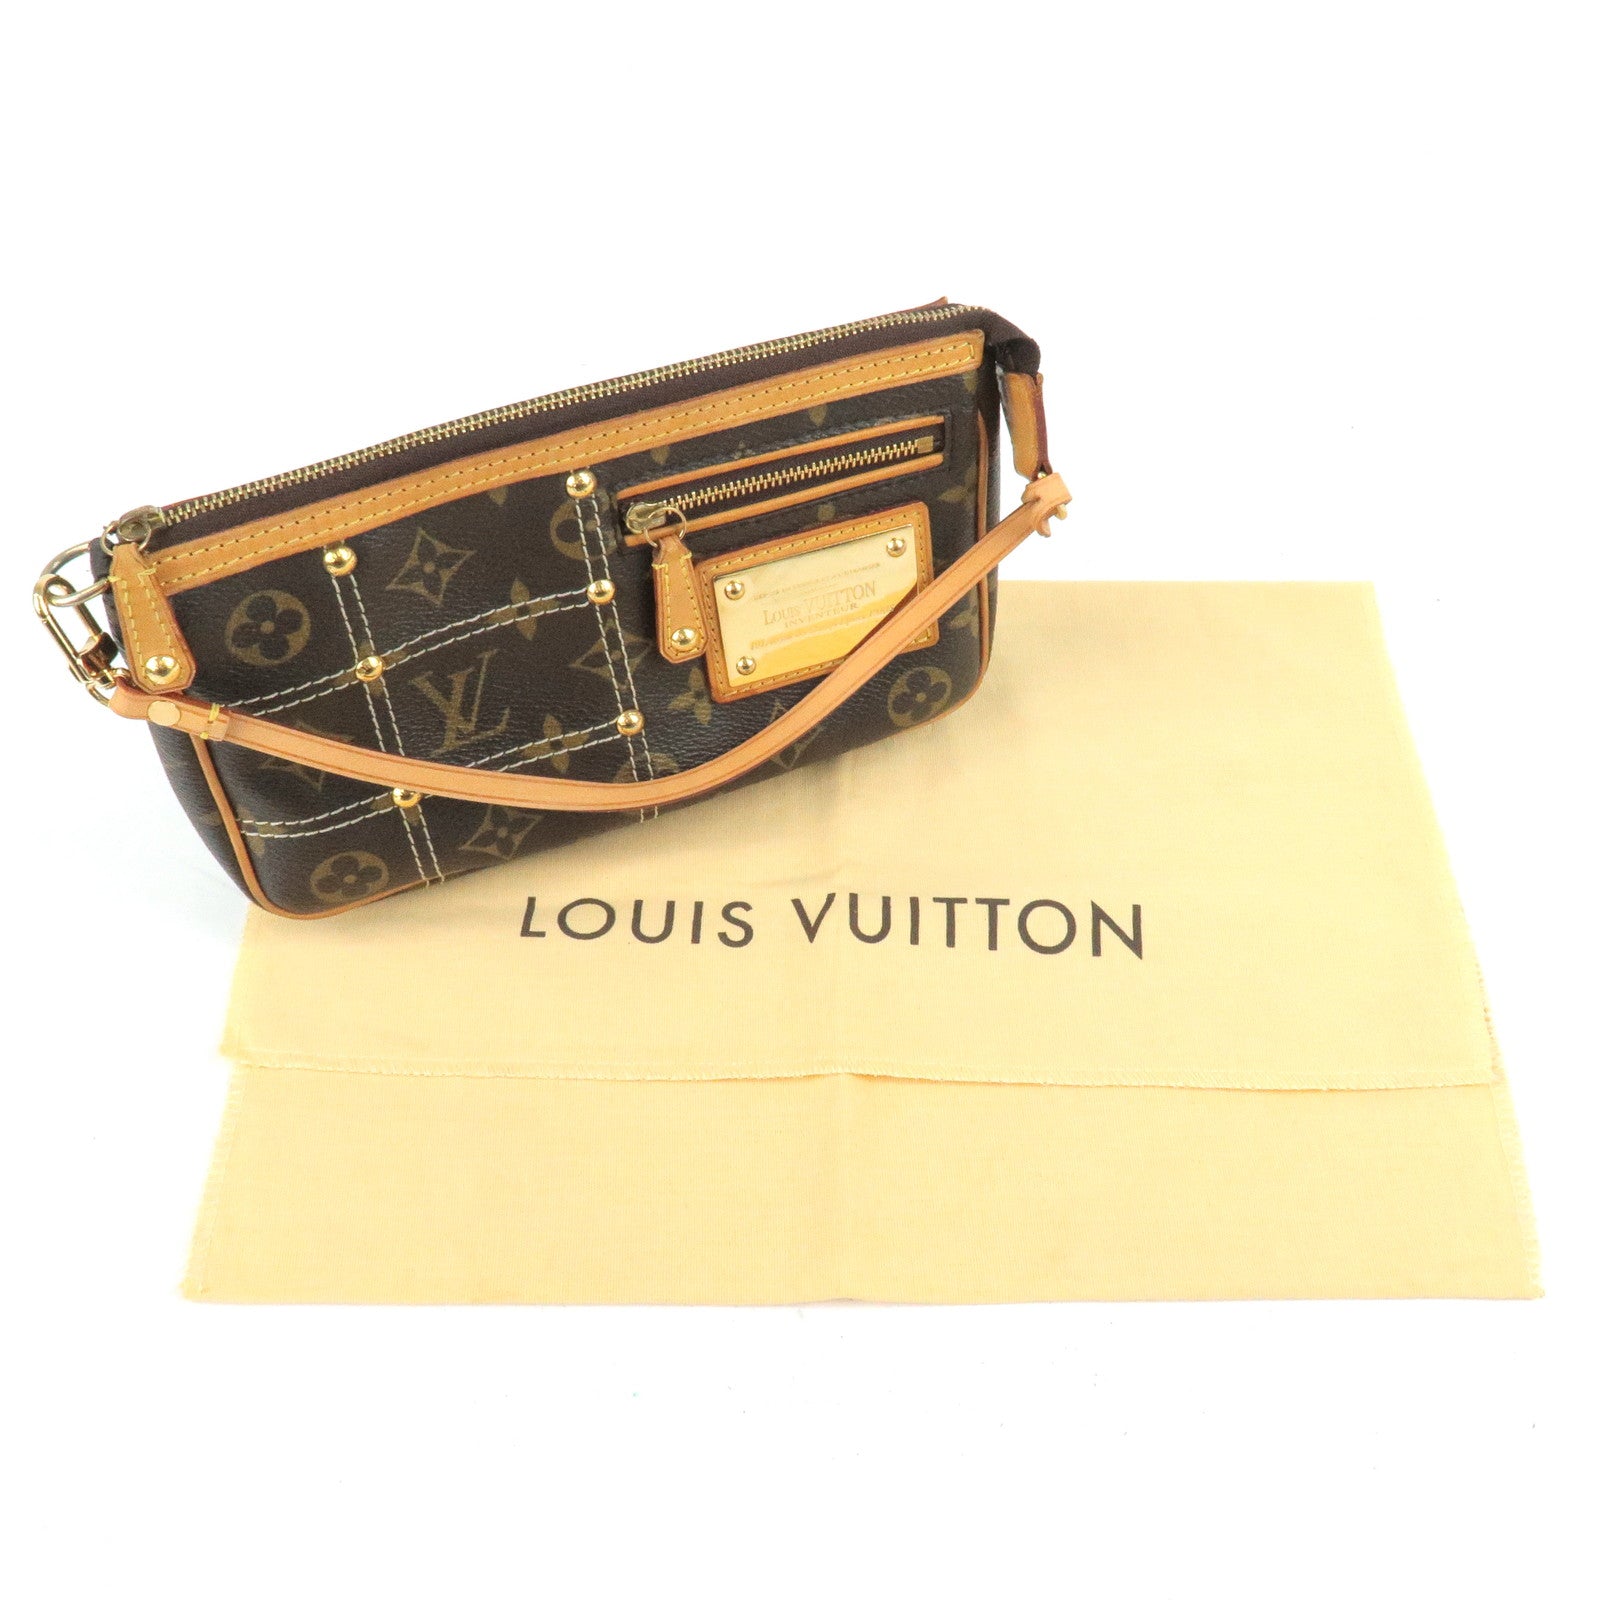 Louis Vuitton Riveting Review 